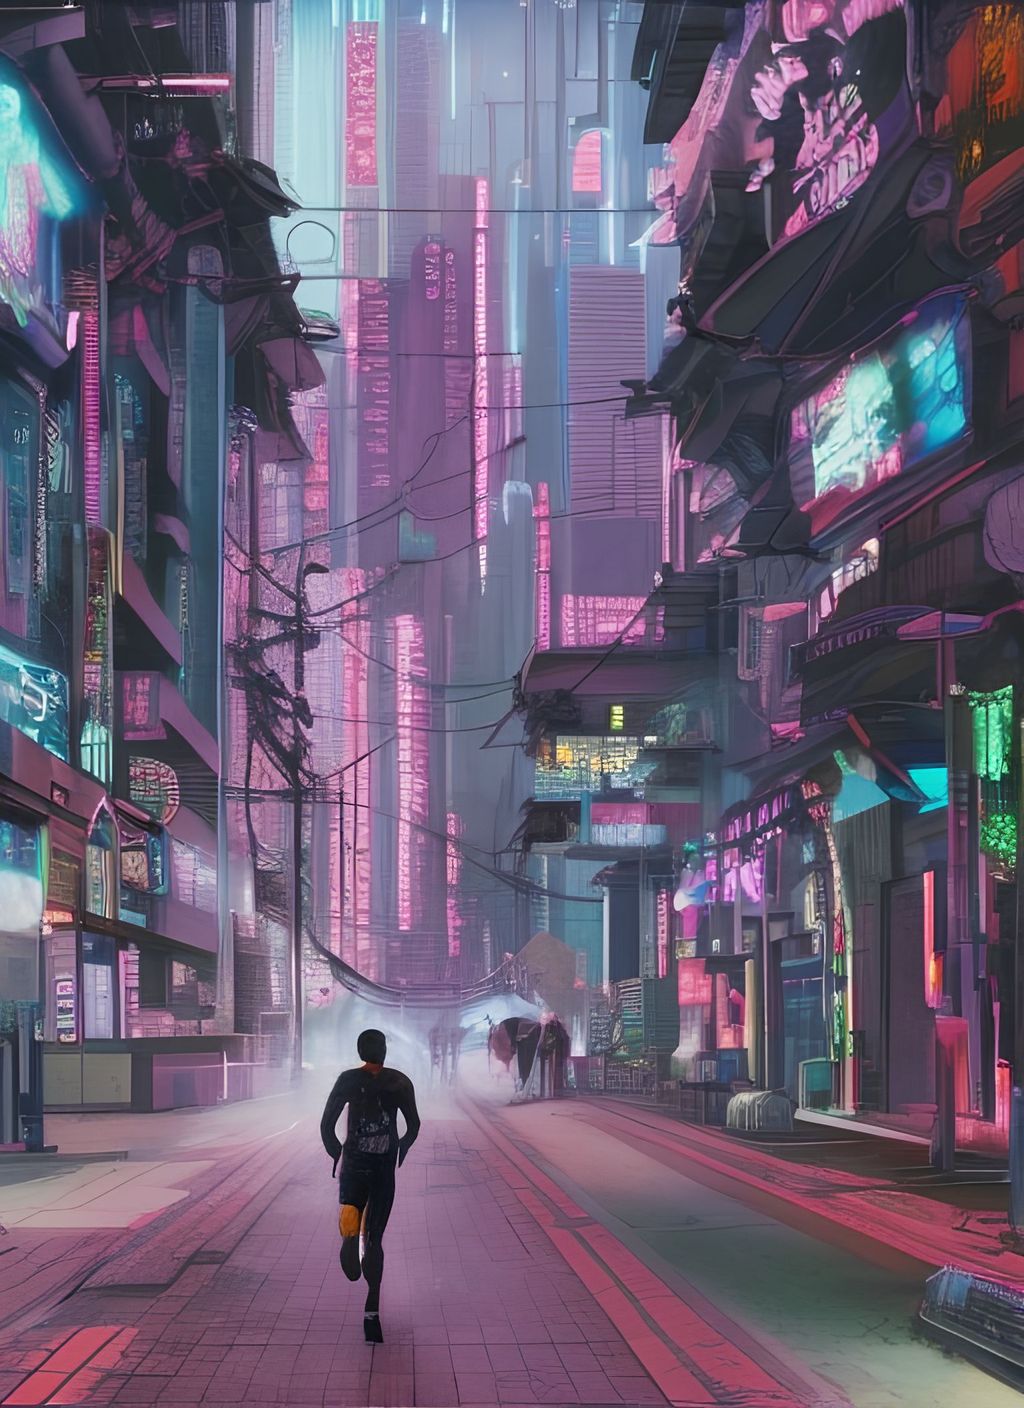 Prompt: Cyberpunk world, A Cyborg running down a street in a cyberpunk city, Hyper-realistic, intricate details